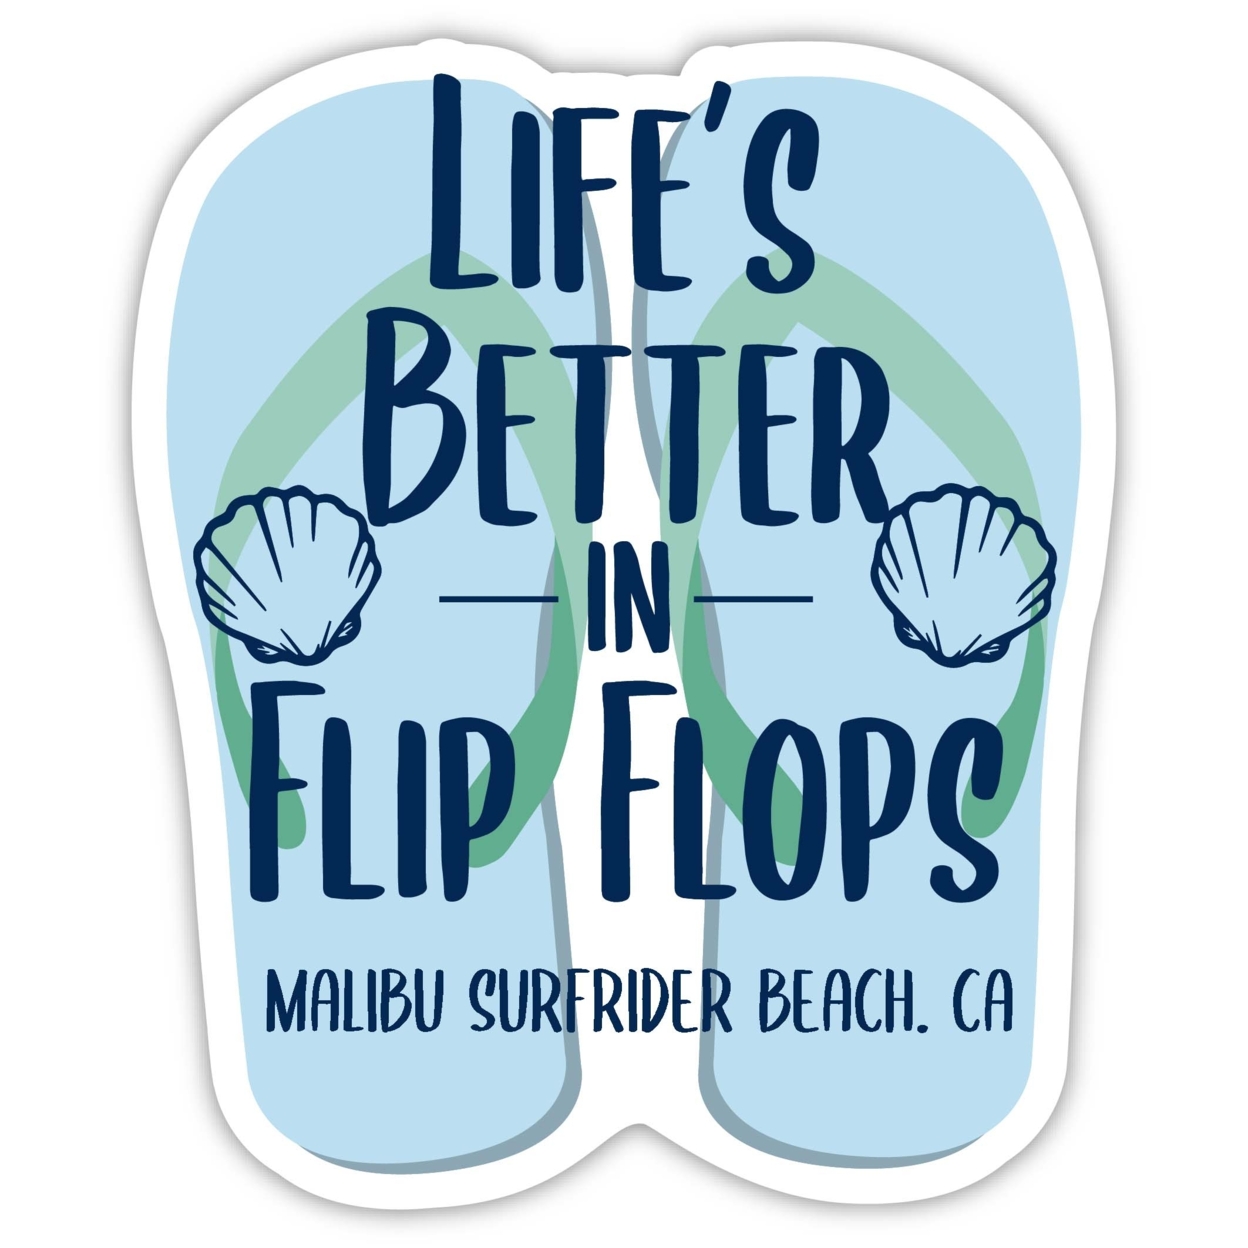 Malibu Surfrider Beach California Souvenir 4 Inch Vinyl Decal Sticker Flip Flop Design